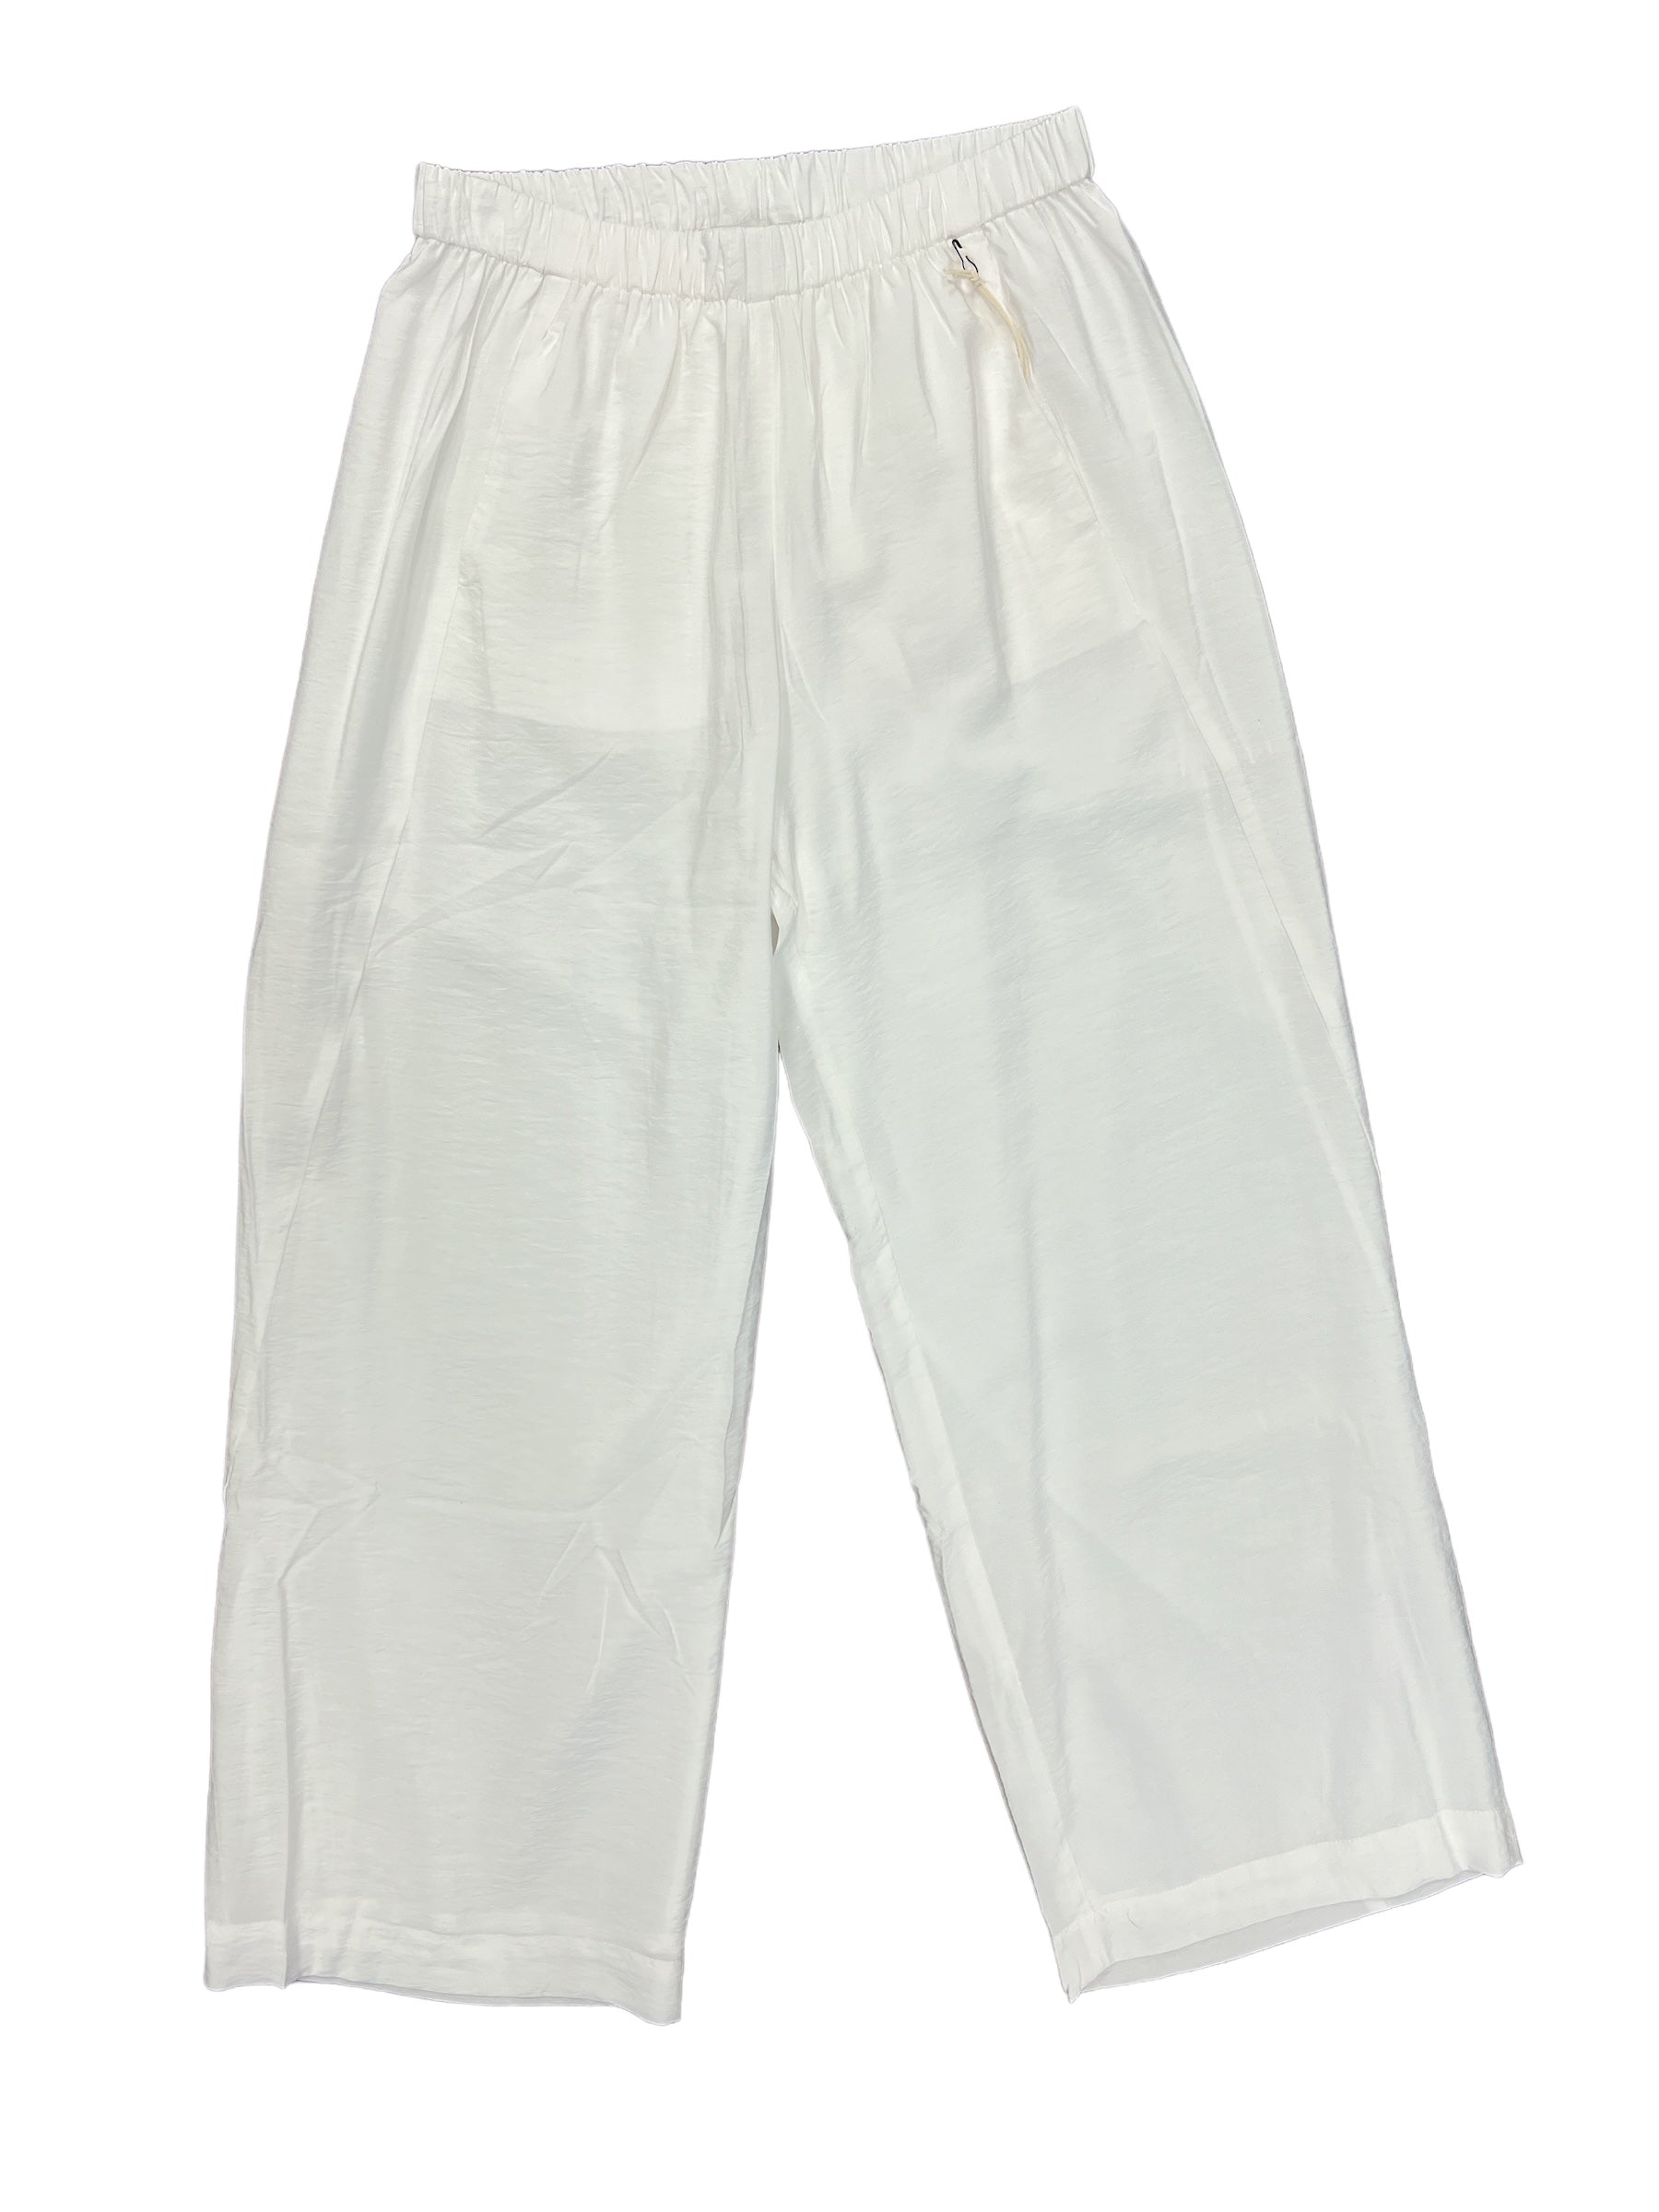 Paris Pants-230 Pants-another love-Simply Stylish Boutique | Women’s & Kid’s Fashion | Paducah, KY